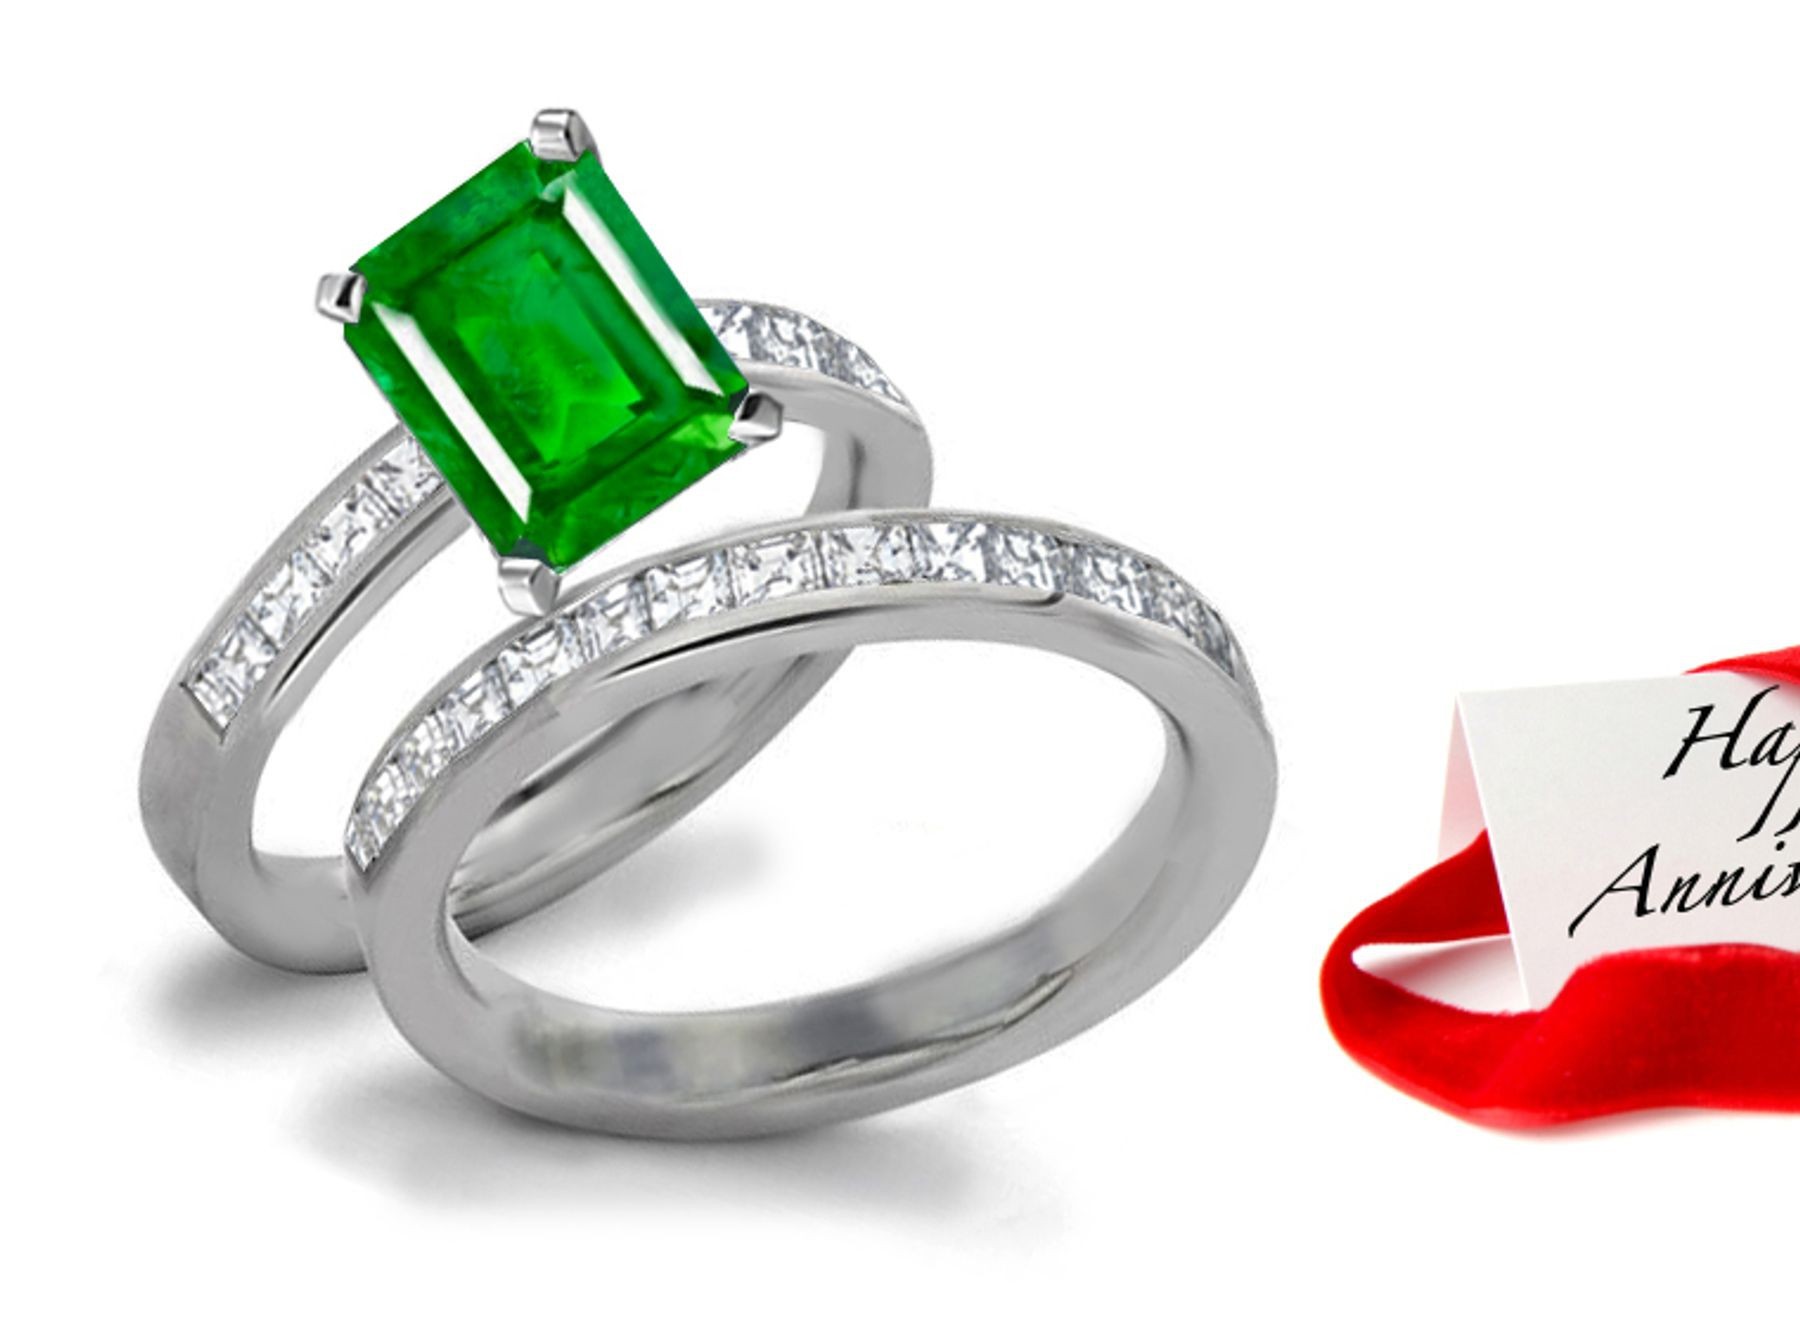 Yellow & Blue Colors Creating Great Shade & Tint of Rich Green Natural Emerald Cut Emerald atop Asscher Cut Diamond Ring & A Diamond Green Stones Band